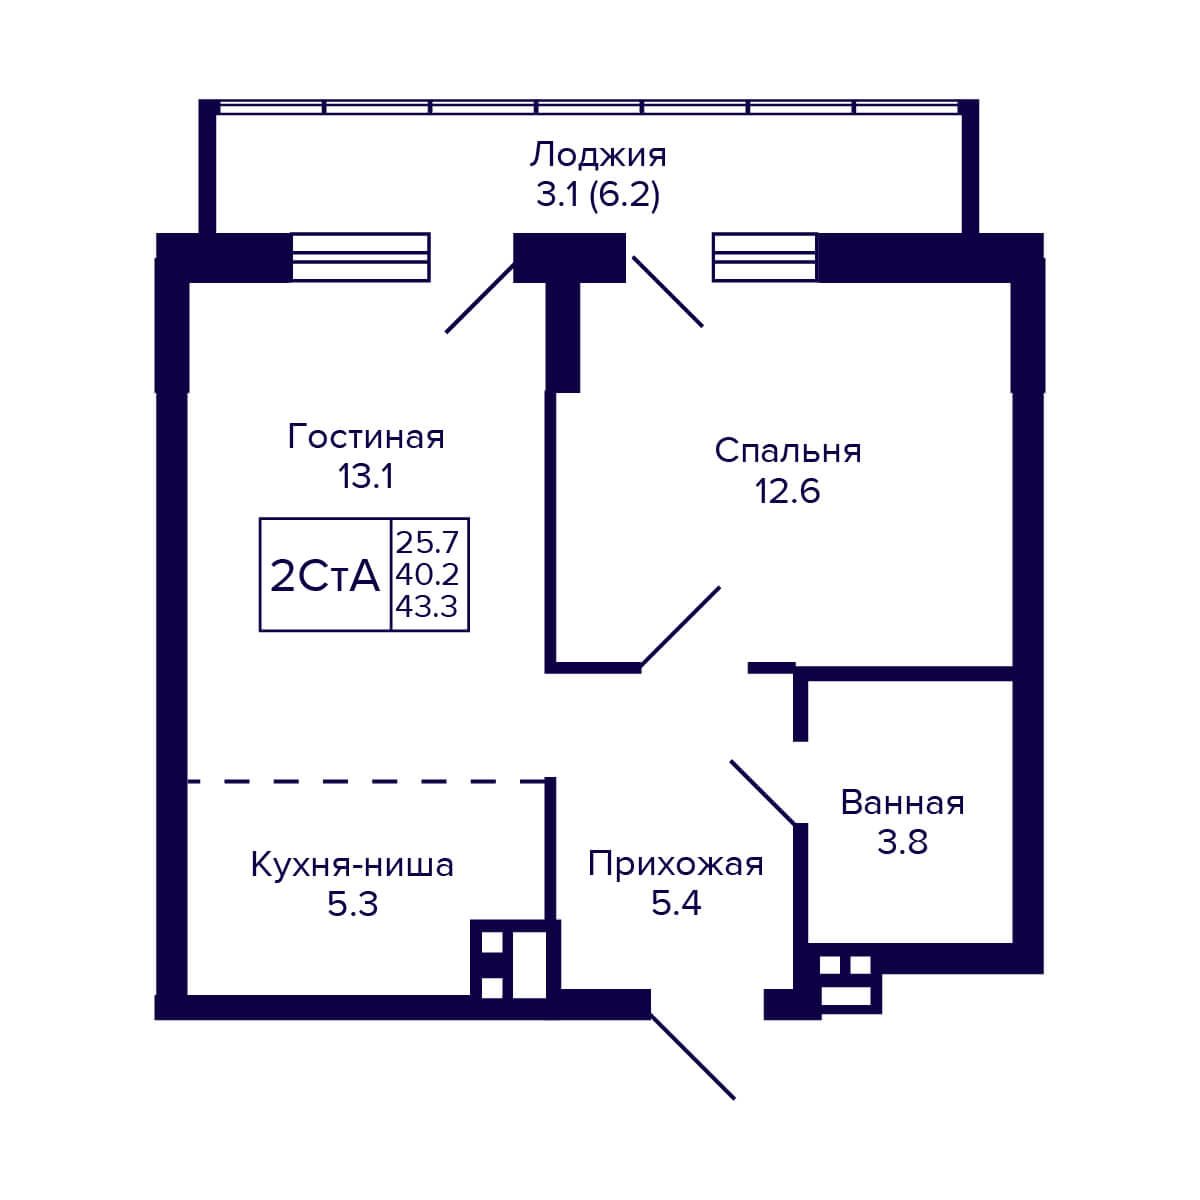 2-комнатная квартира 43.3м2 ЖК Gorizont